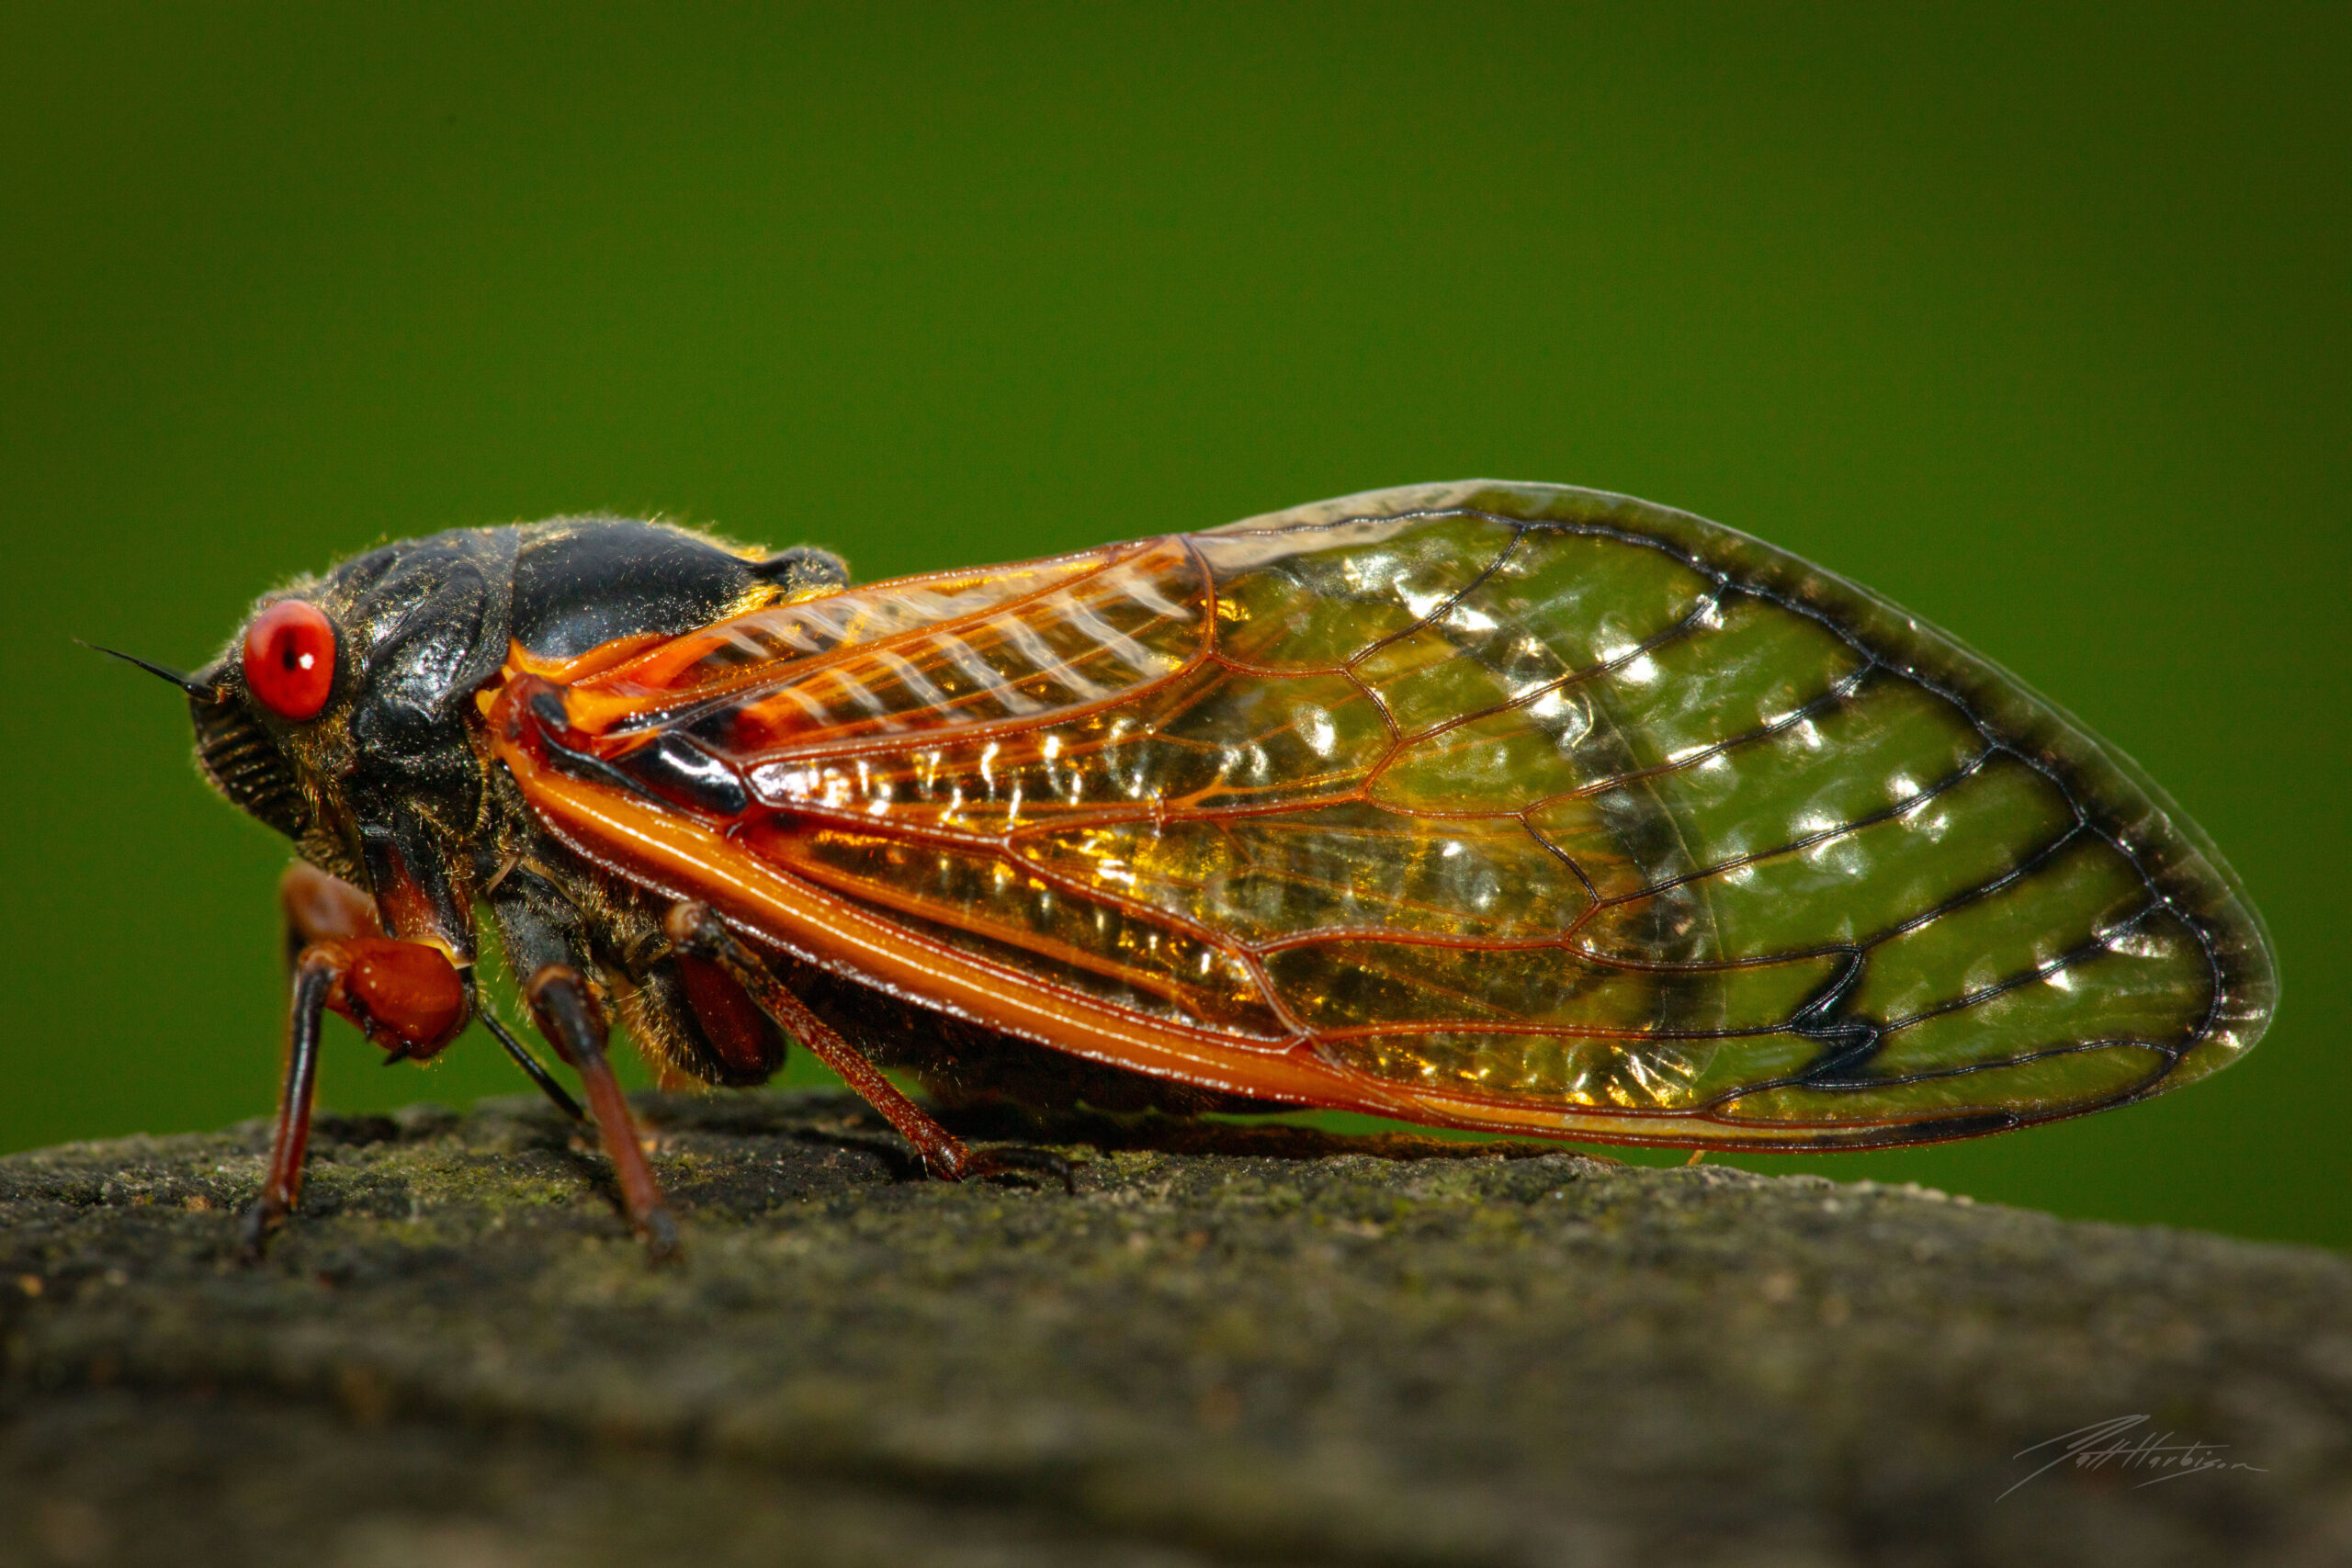 The 17 Year Cicada